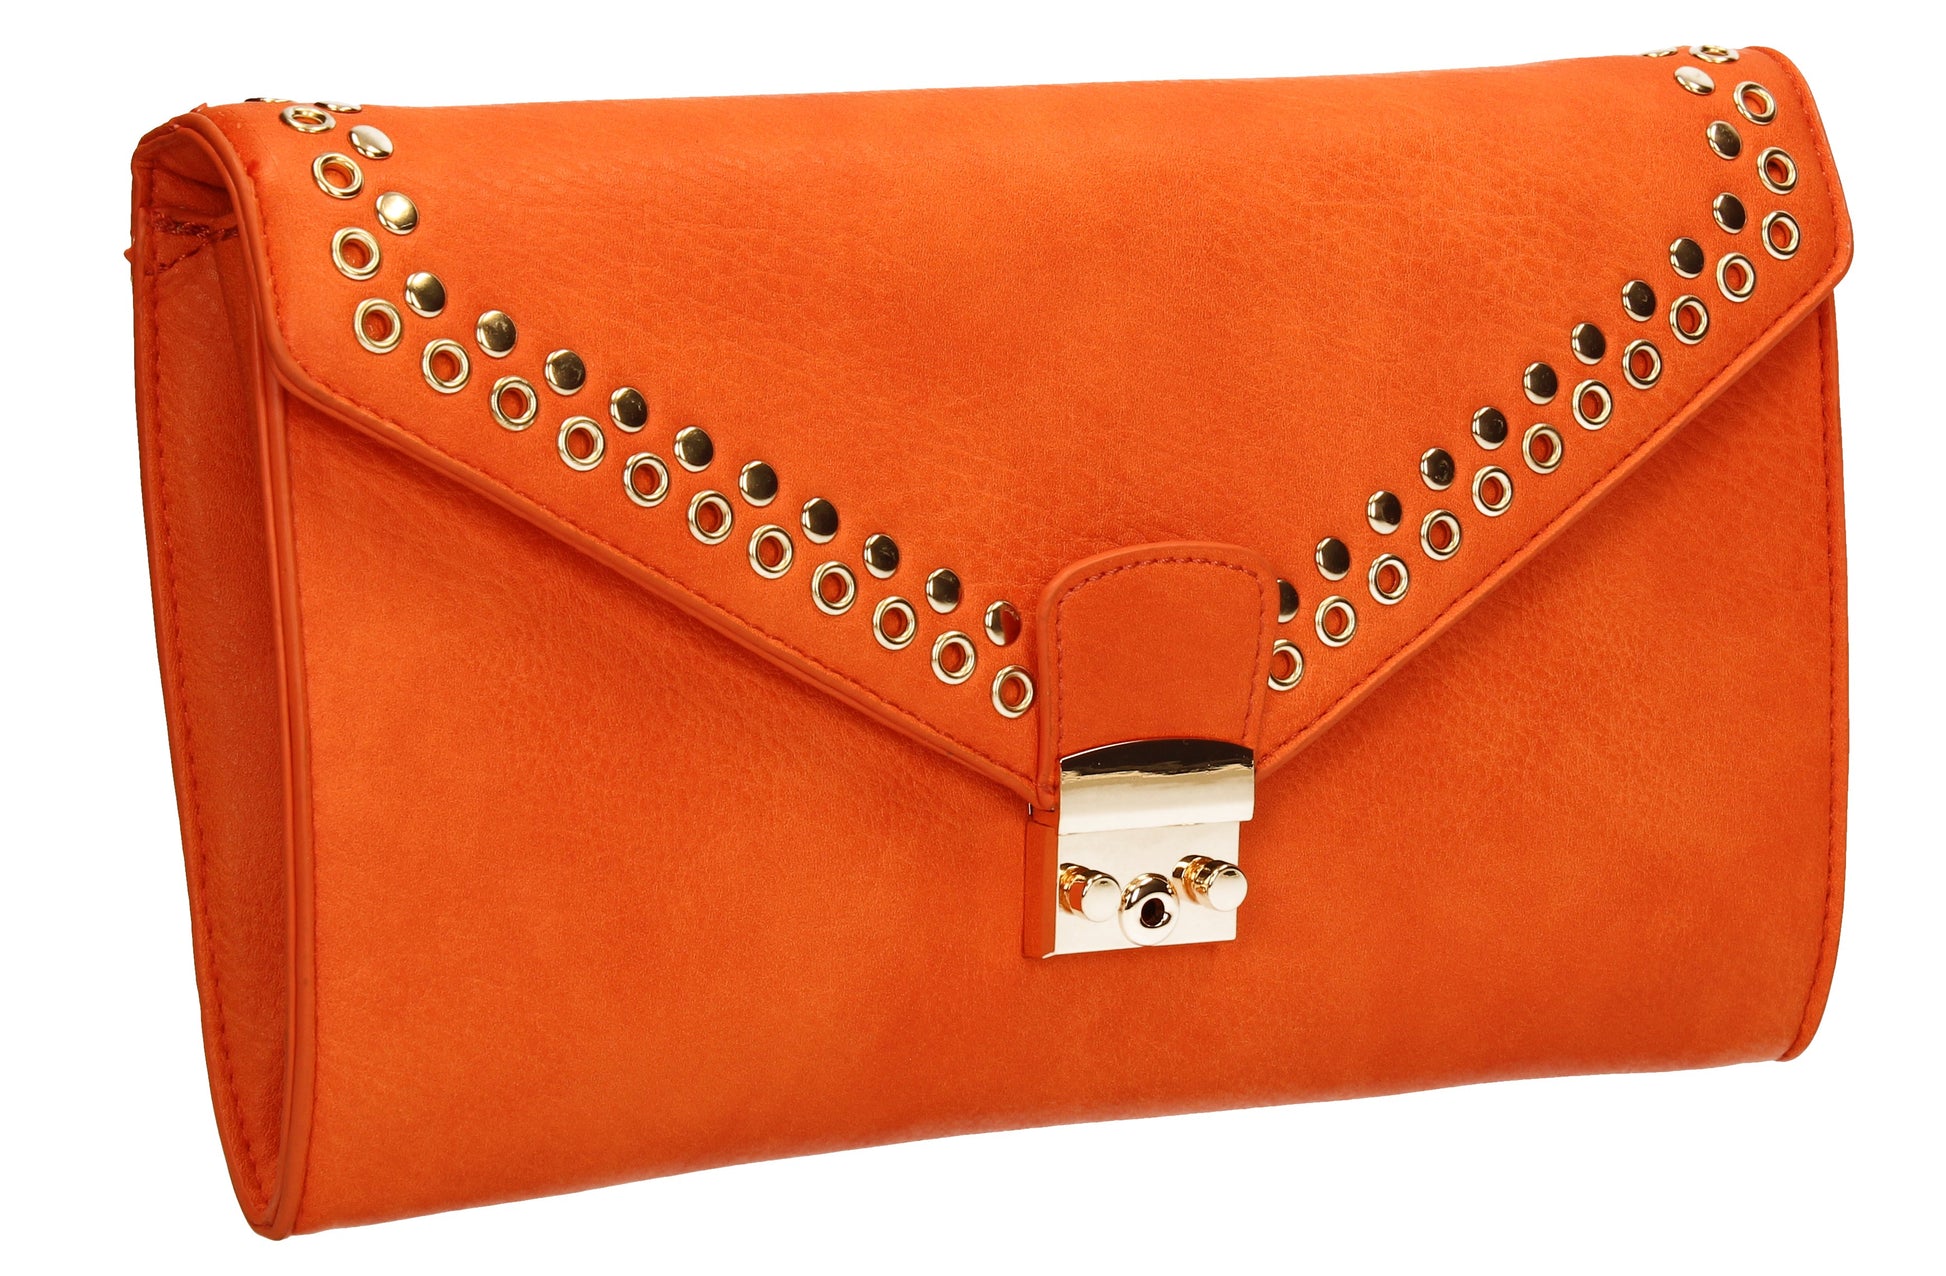 SWANKYSWANS Beni Clutch Bag Orange Cute Cheap Clutch Bag For Weddings School and Work